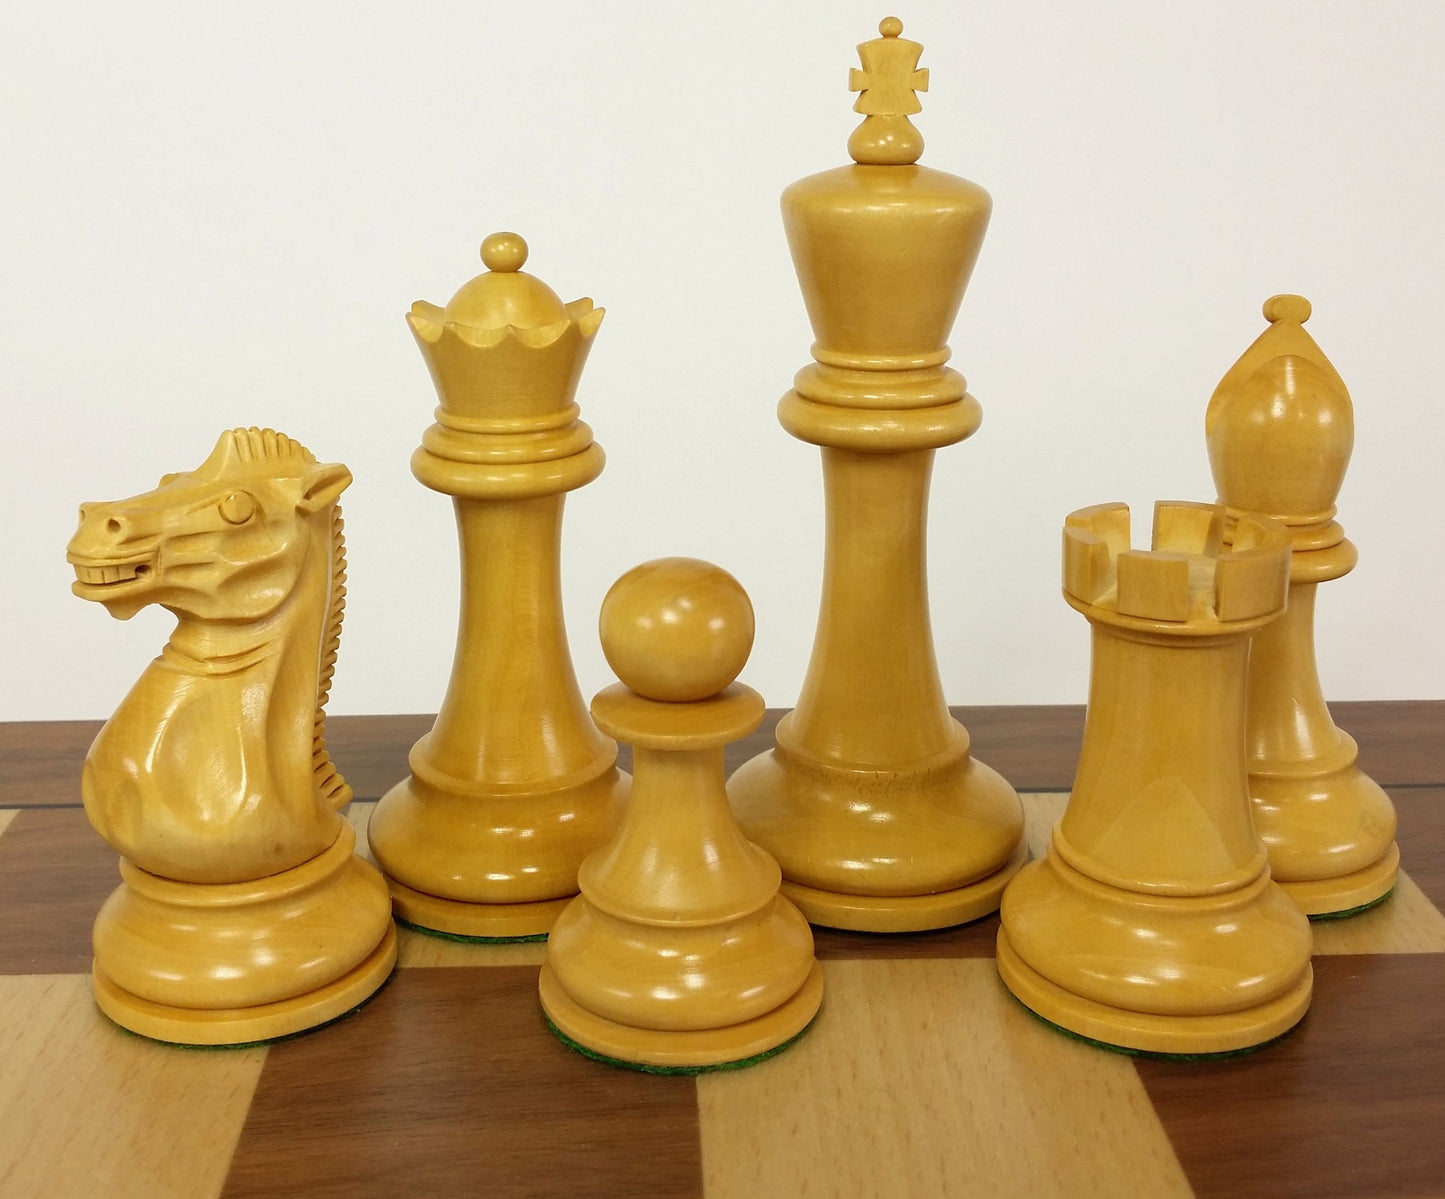 Black 4 5/8" KIng Anderssen Staunton Wood Chess Set Large 19" Walnut Board